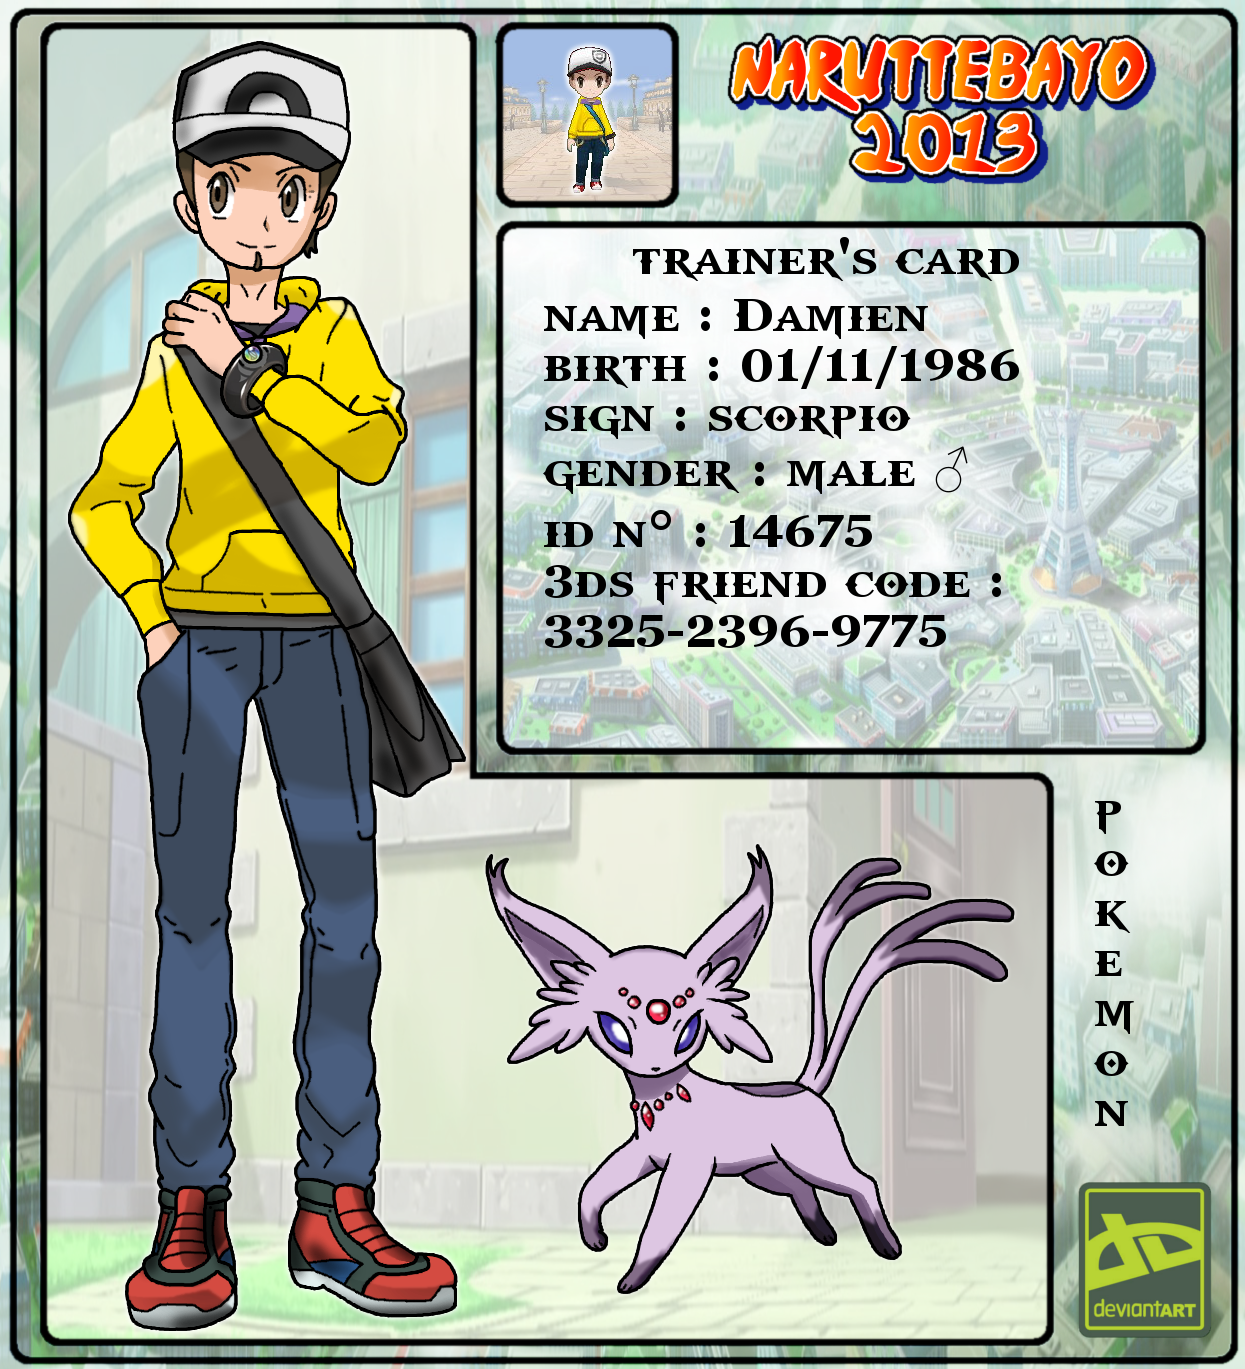 Deviantart pokemon trainer id card 2013 by Naruttebayo67 on.